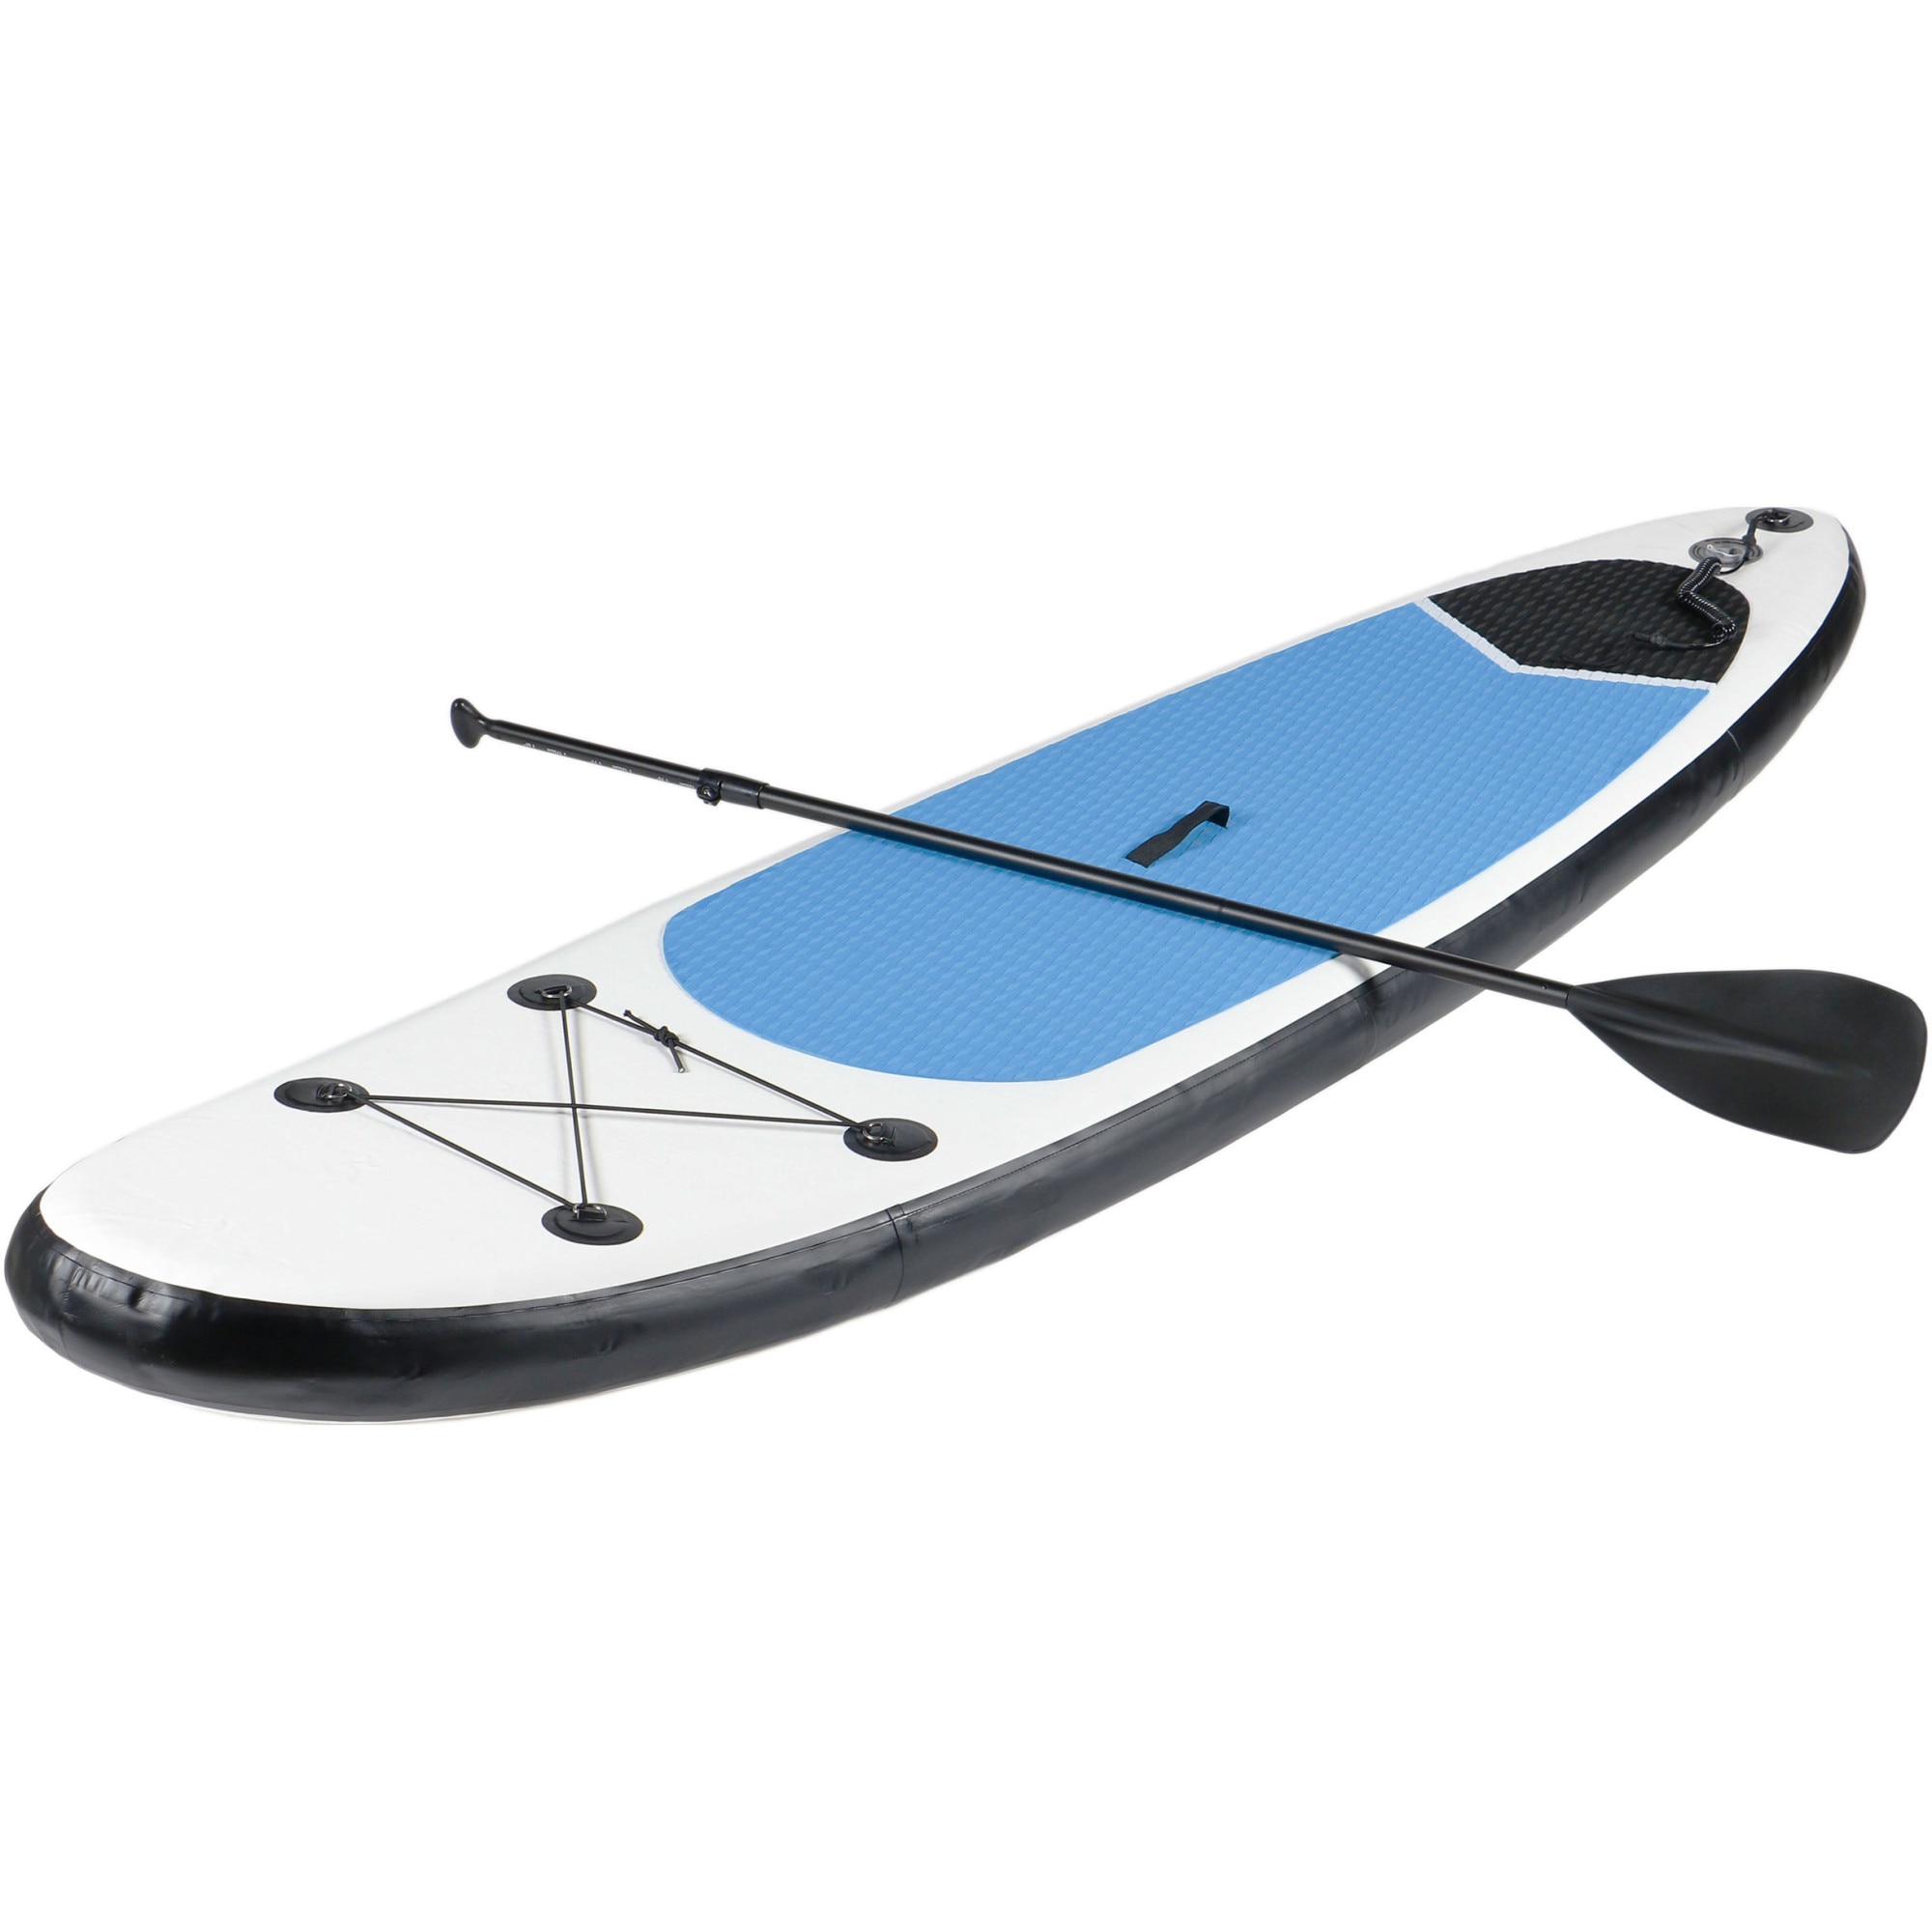 Fotografie Set placa gonflabila Stand Up PaddleBoard Dynamic SUP, camera dubla, 320*80*15 cm, cu pompa si sac pentru transport incluse